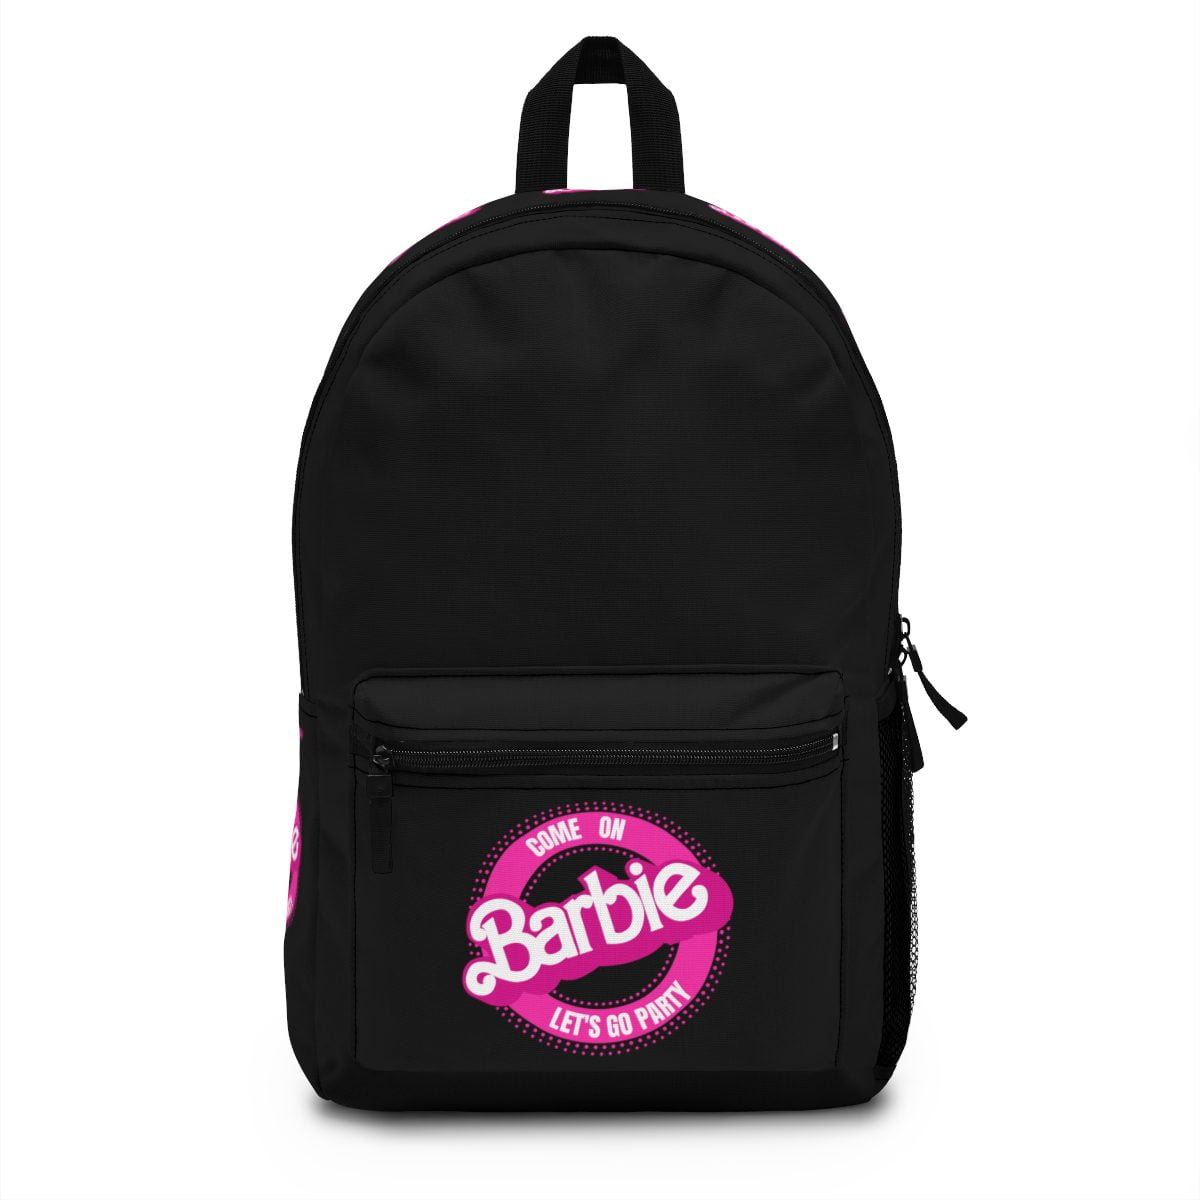 Black Backpack with Circular Classic Barbie Logo Cool Kiddo